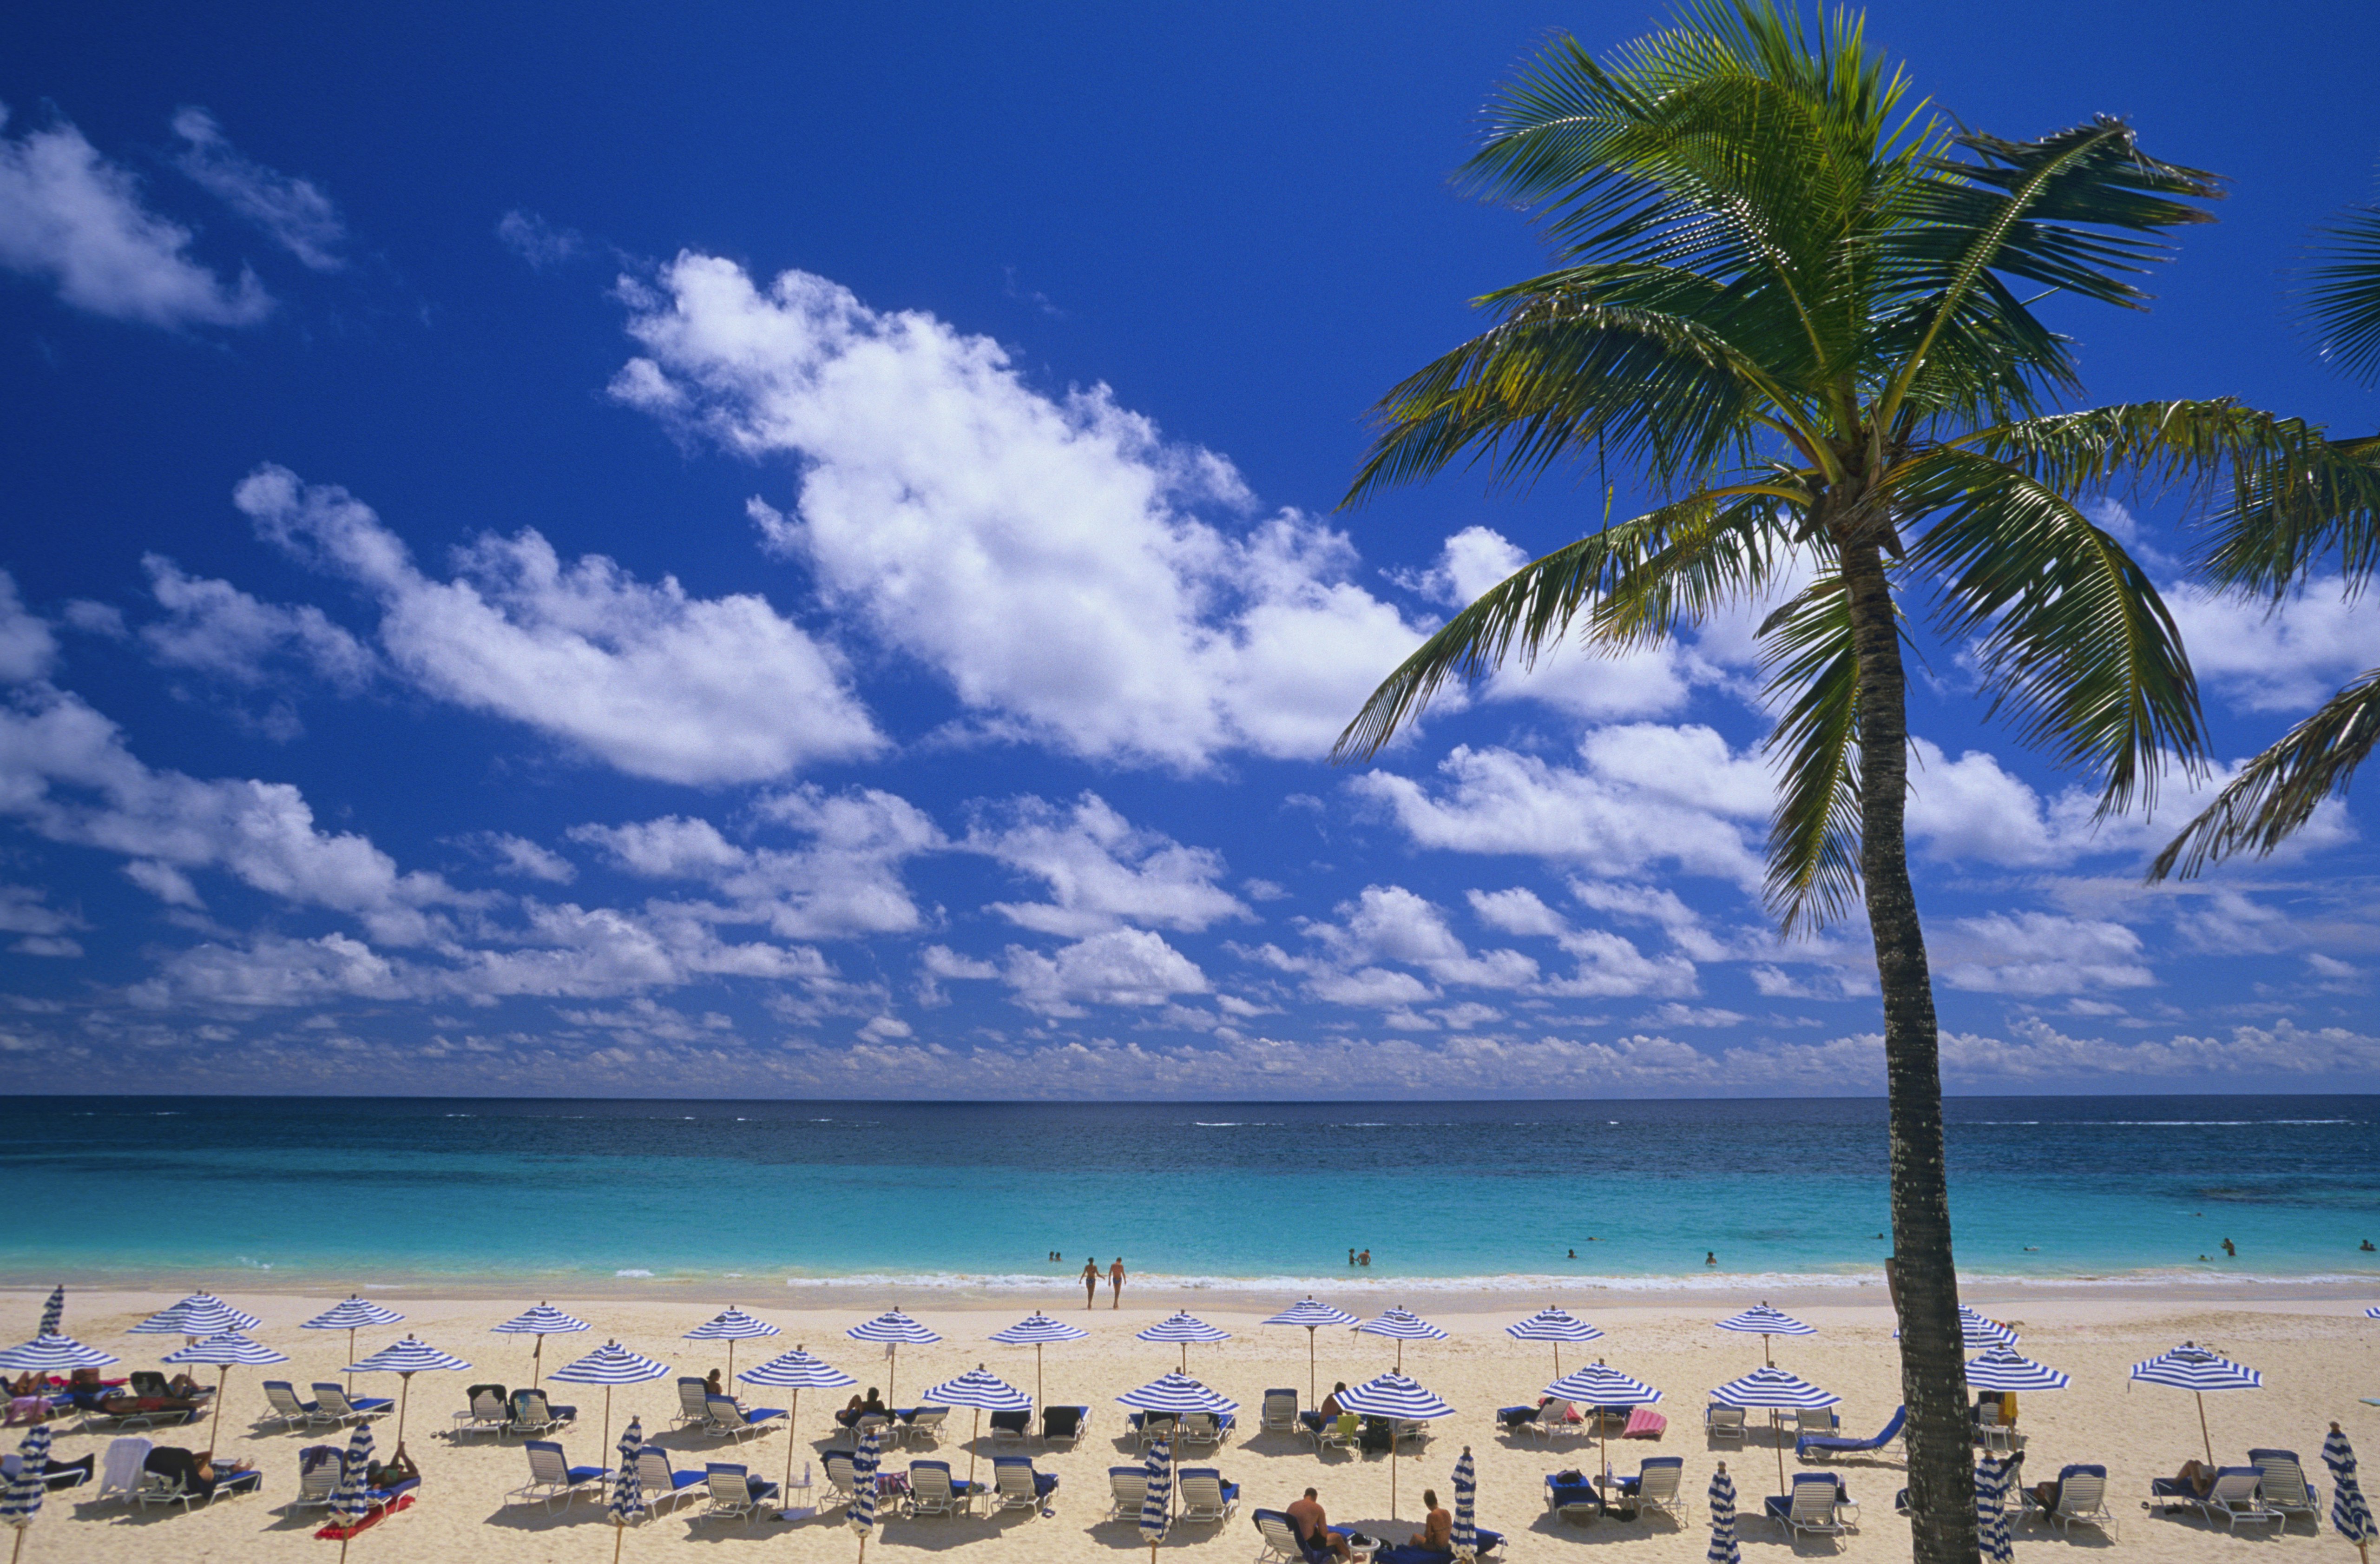 A view of beach umbrellas and sand at Elbow Beach, Bermuda